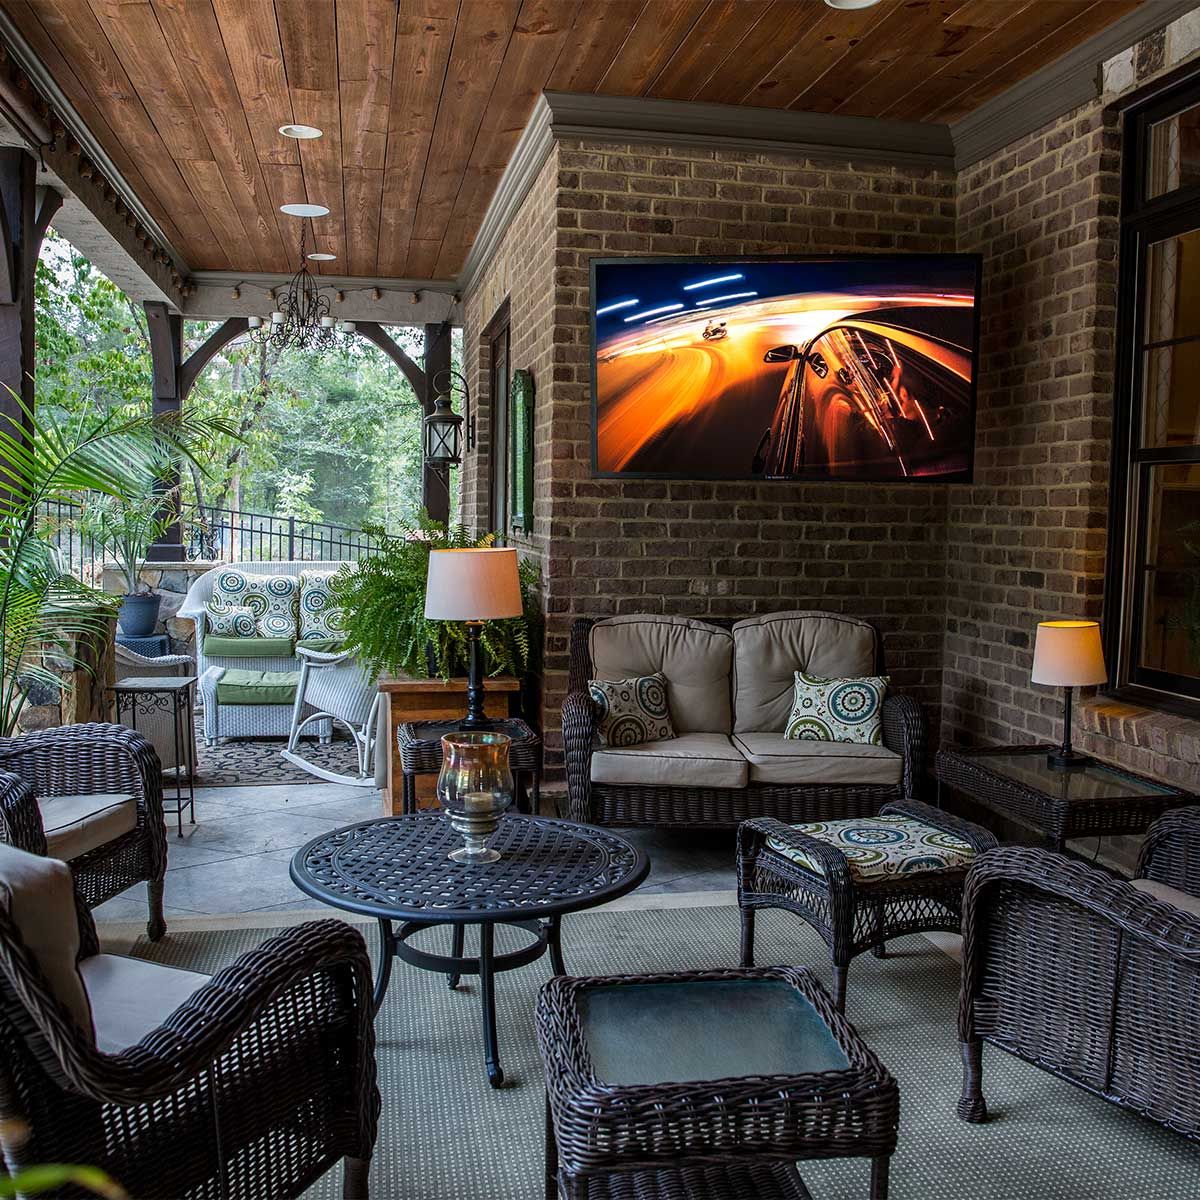 Sunbrite Veranda Full Shade Outdoor 4K LED TV, mounted on a shaded outdoor patio